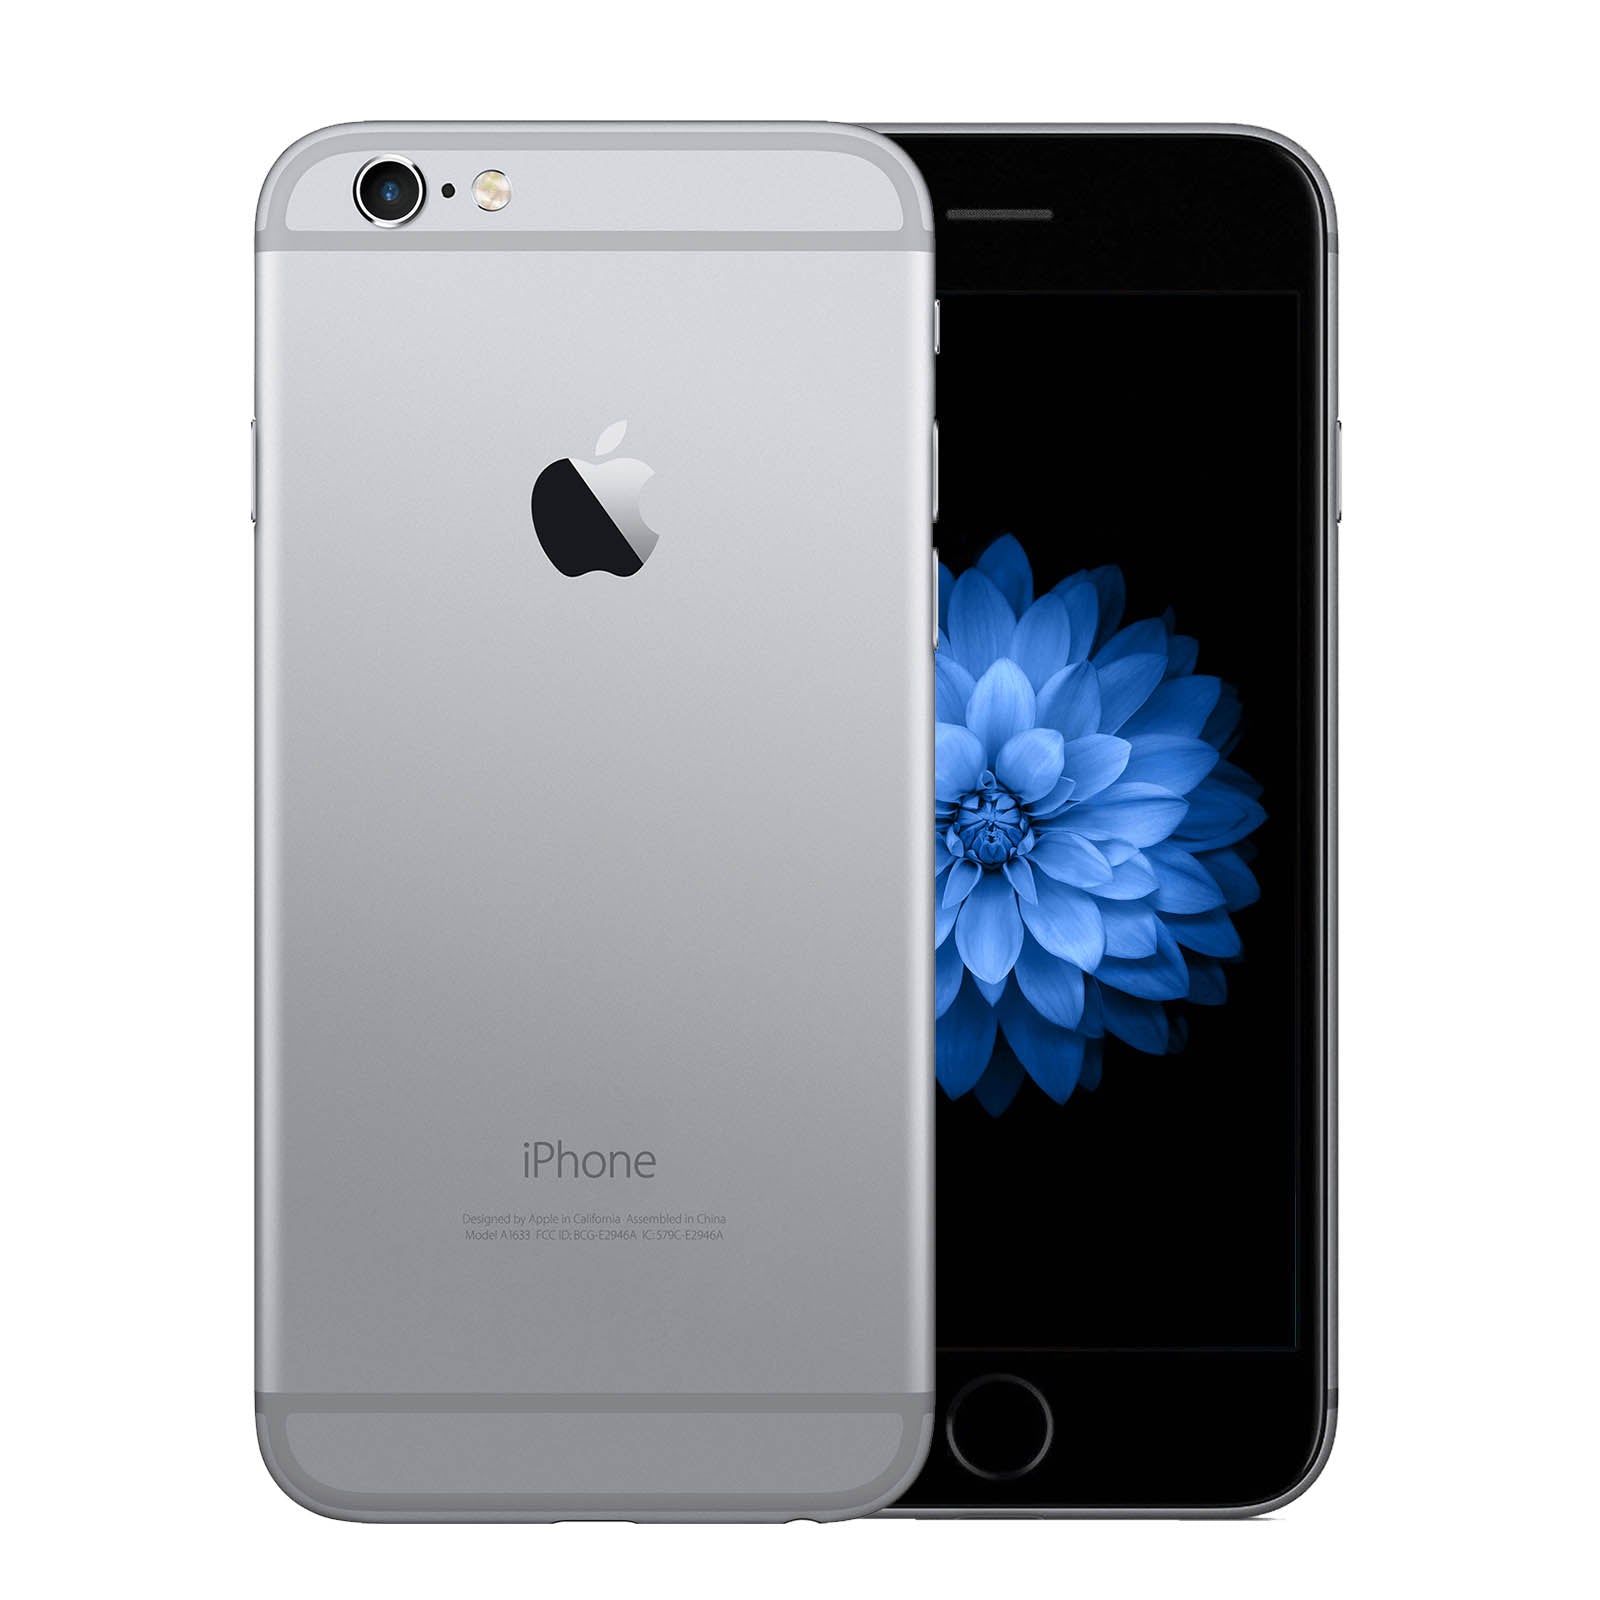 Apple iPhone 6 128GB Space Grey Pristine - Unlocked